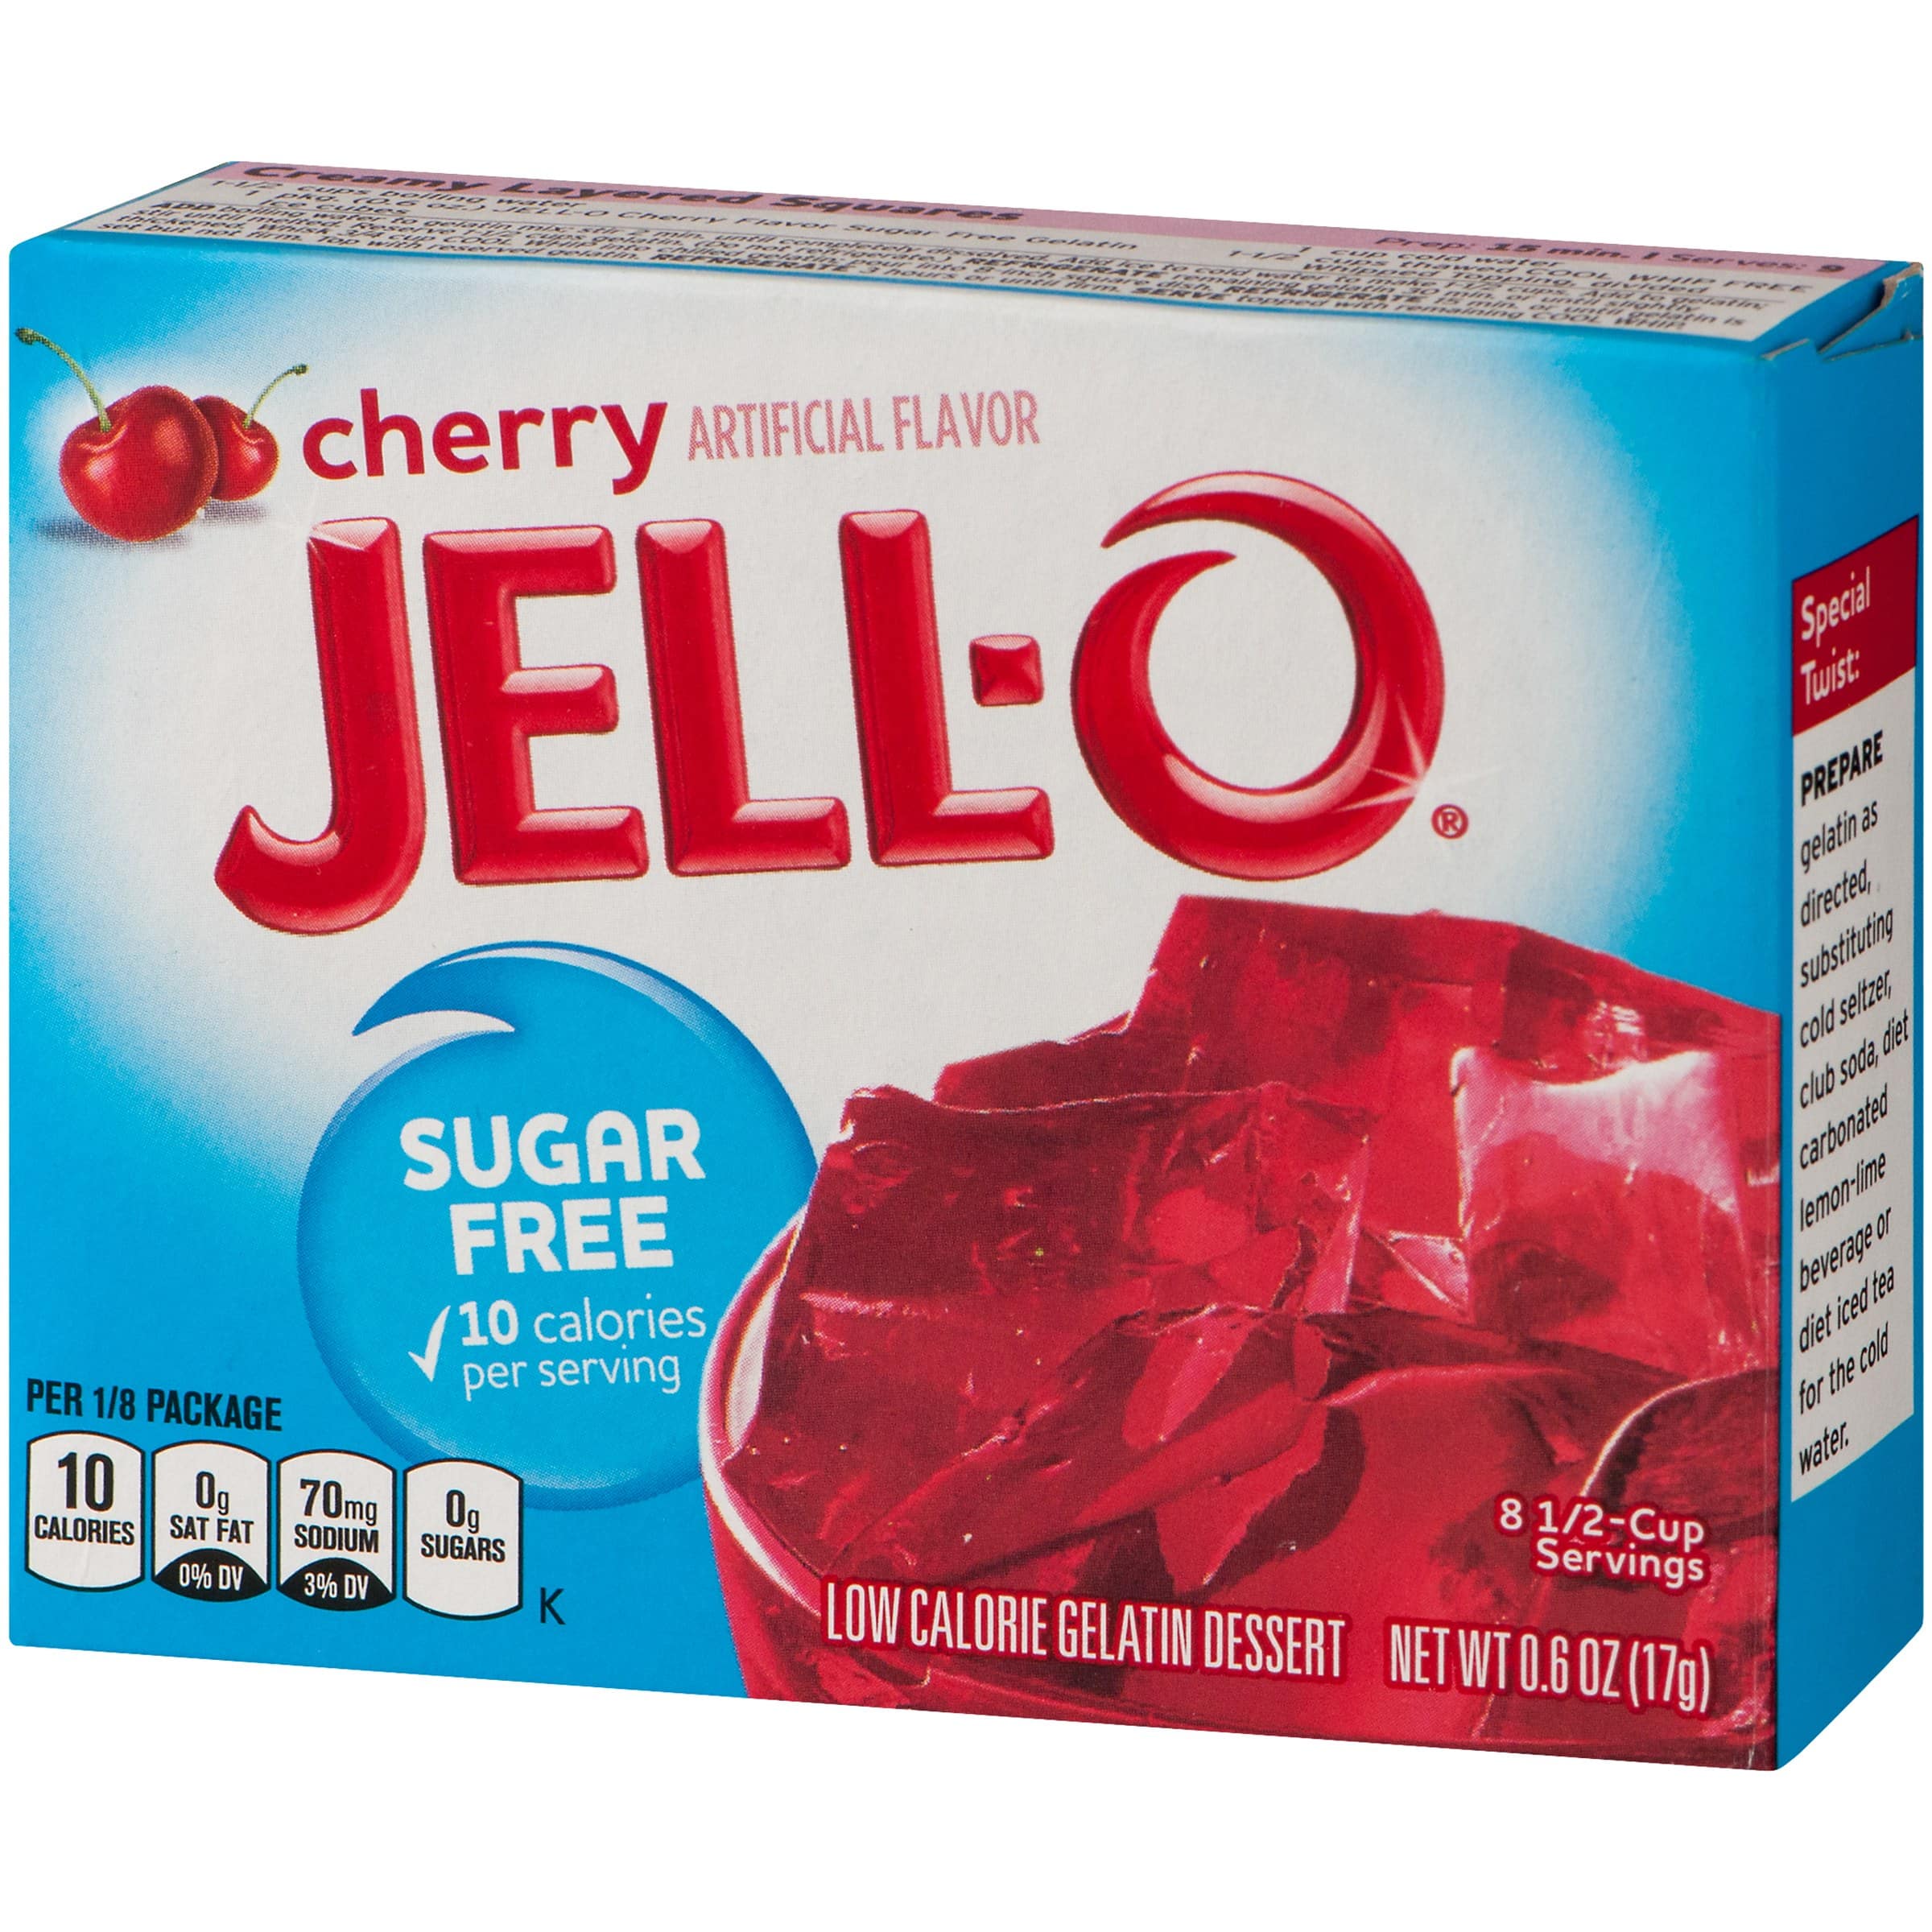 Jell